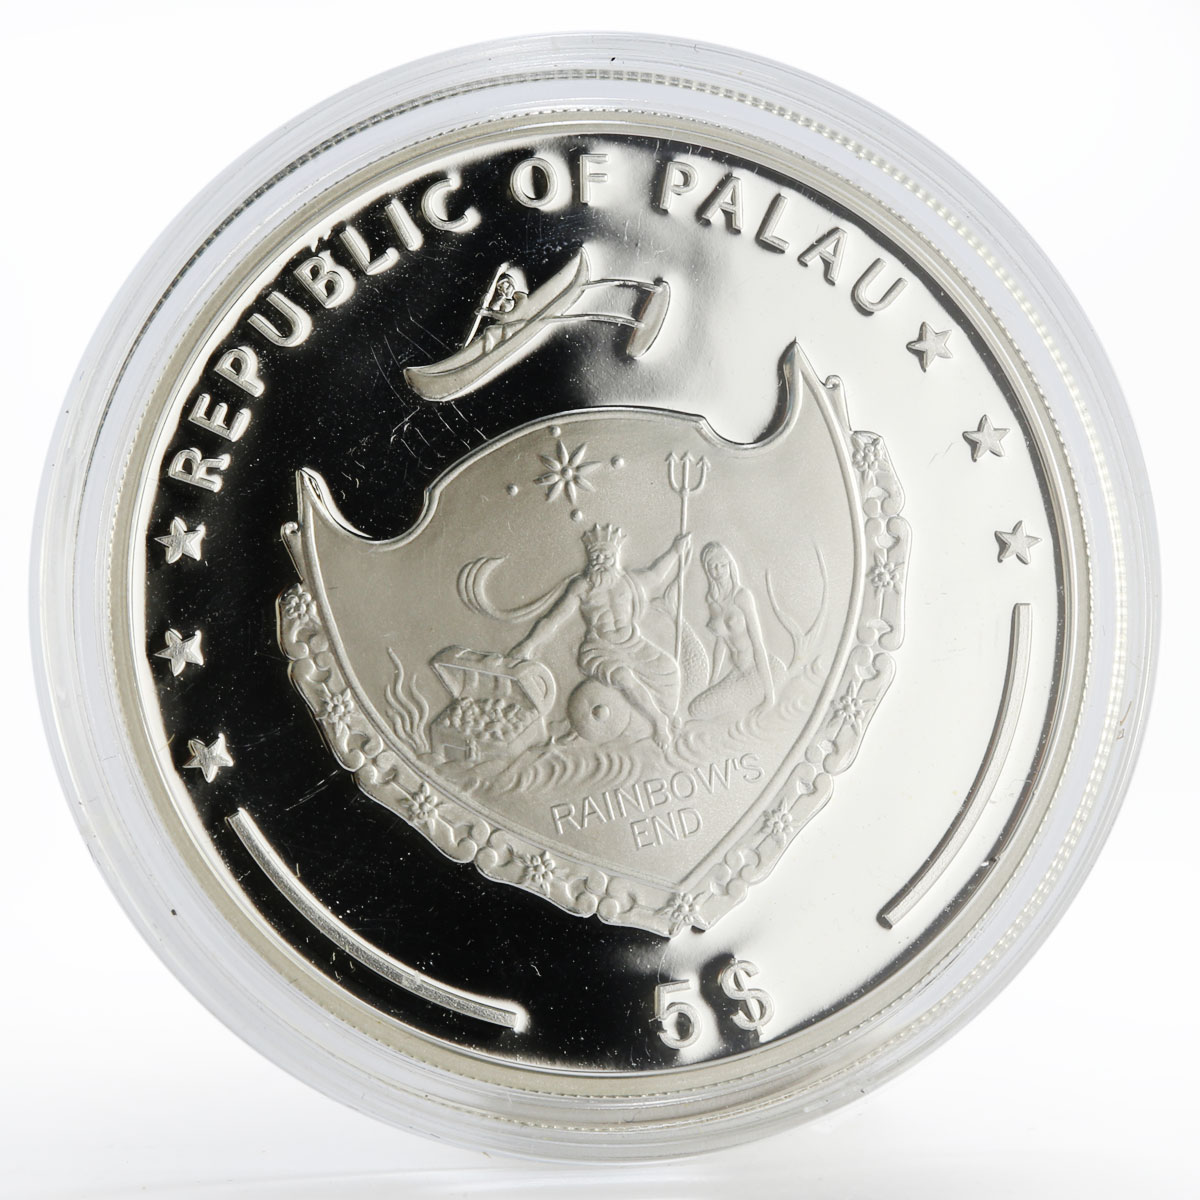 Palau 5 dollars Wonders Neuschwanstein Castle colored proof silver coin 2010